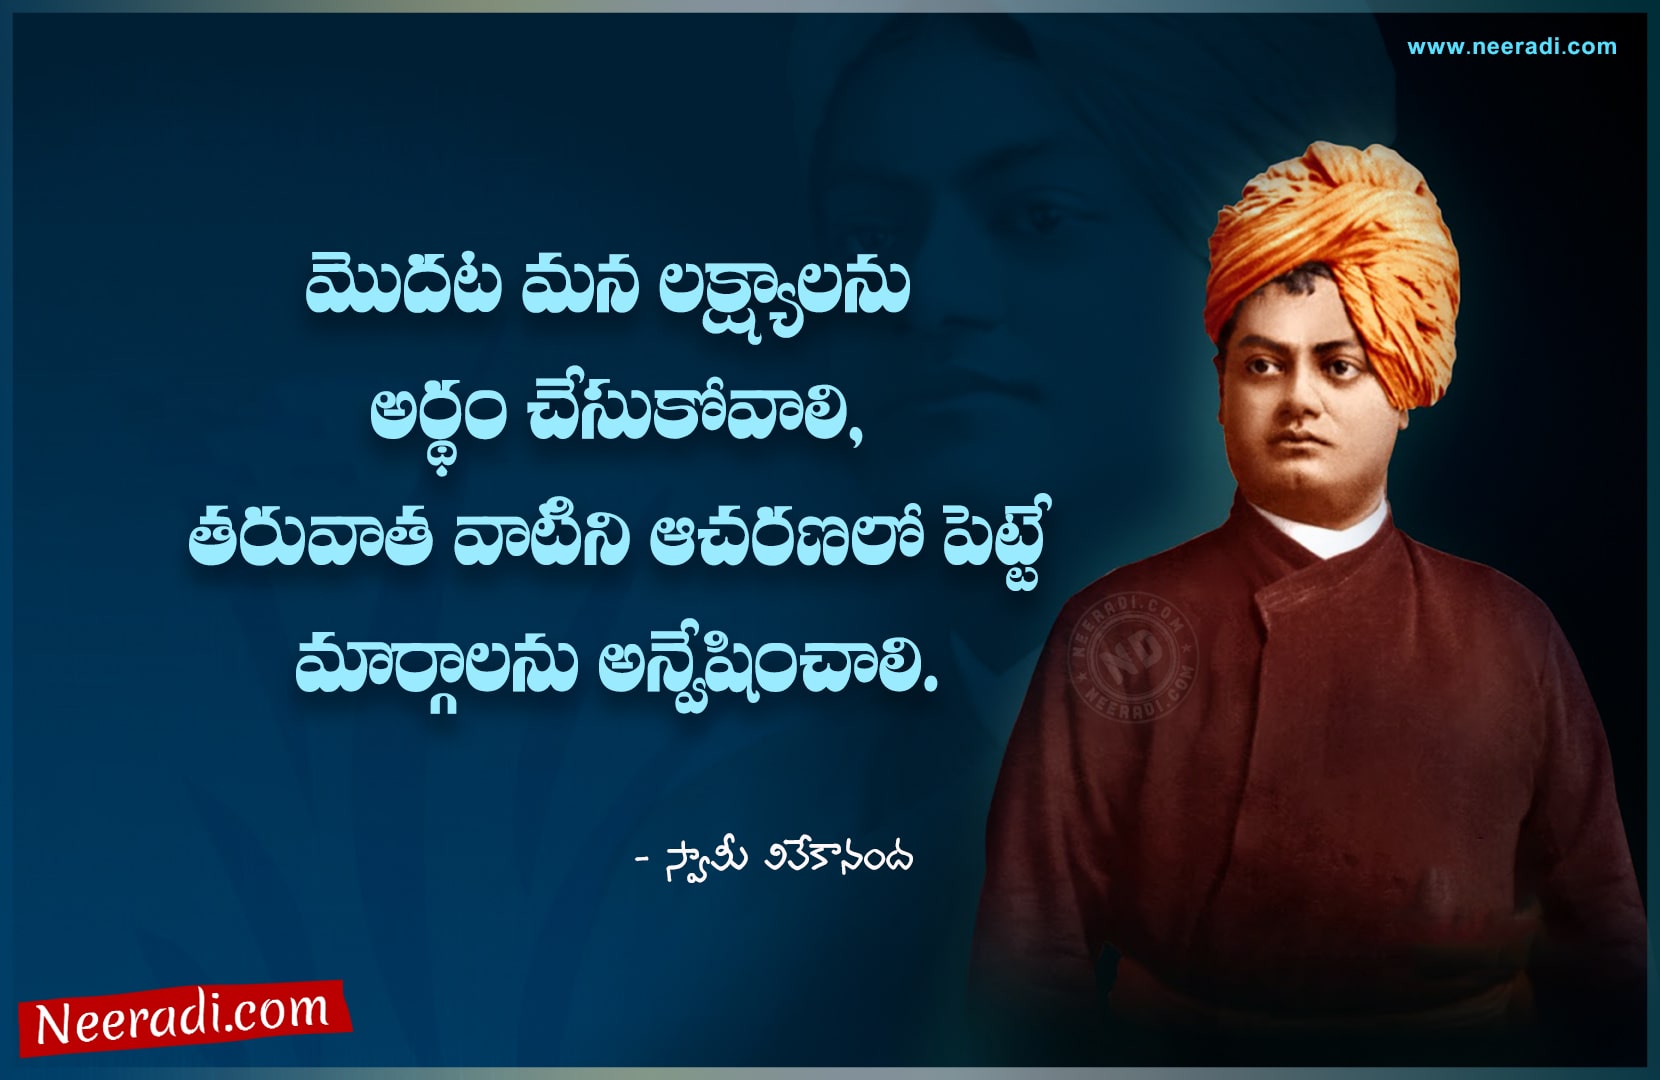 Telugu Inspirational Quotes Swami Vivekananda inspirational Quotes Life Motivational Quotes top Motivationa Quotes Telugu Kavithalu Telugu Motivationa quotes Swami Vivekananda